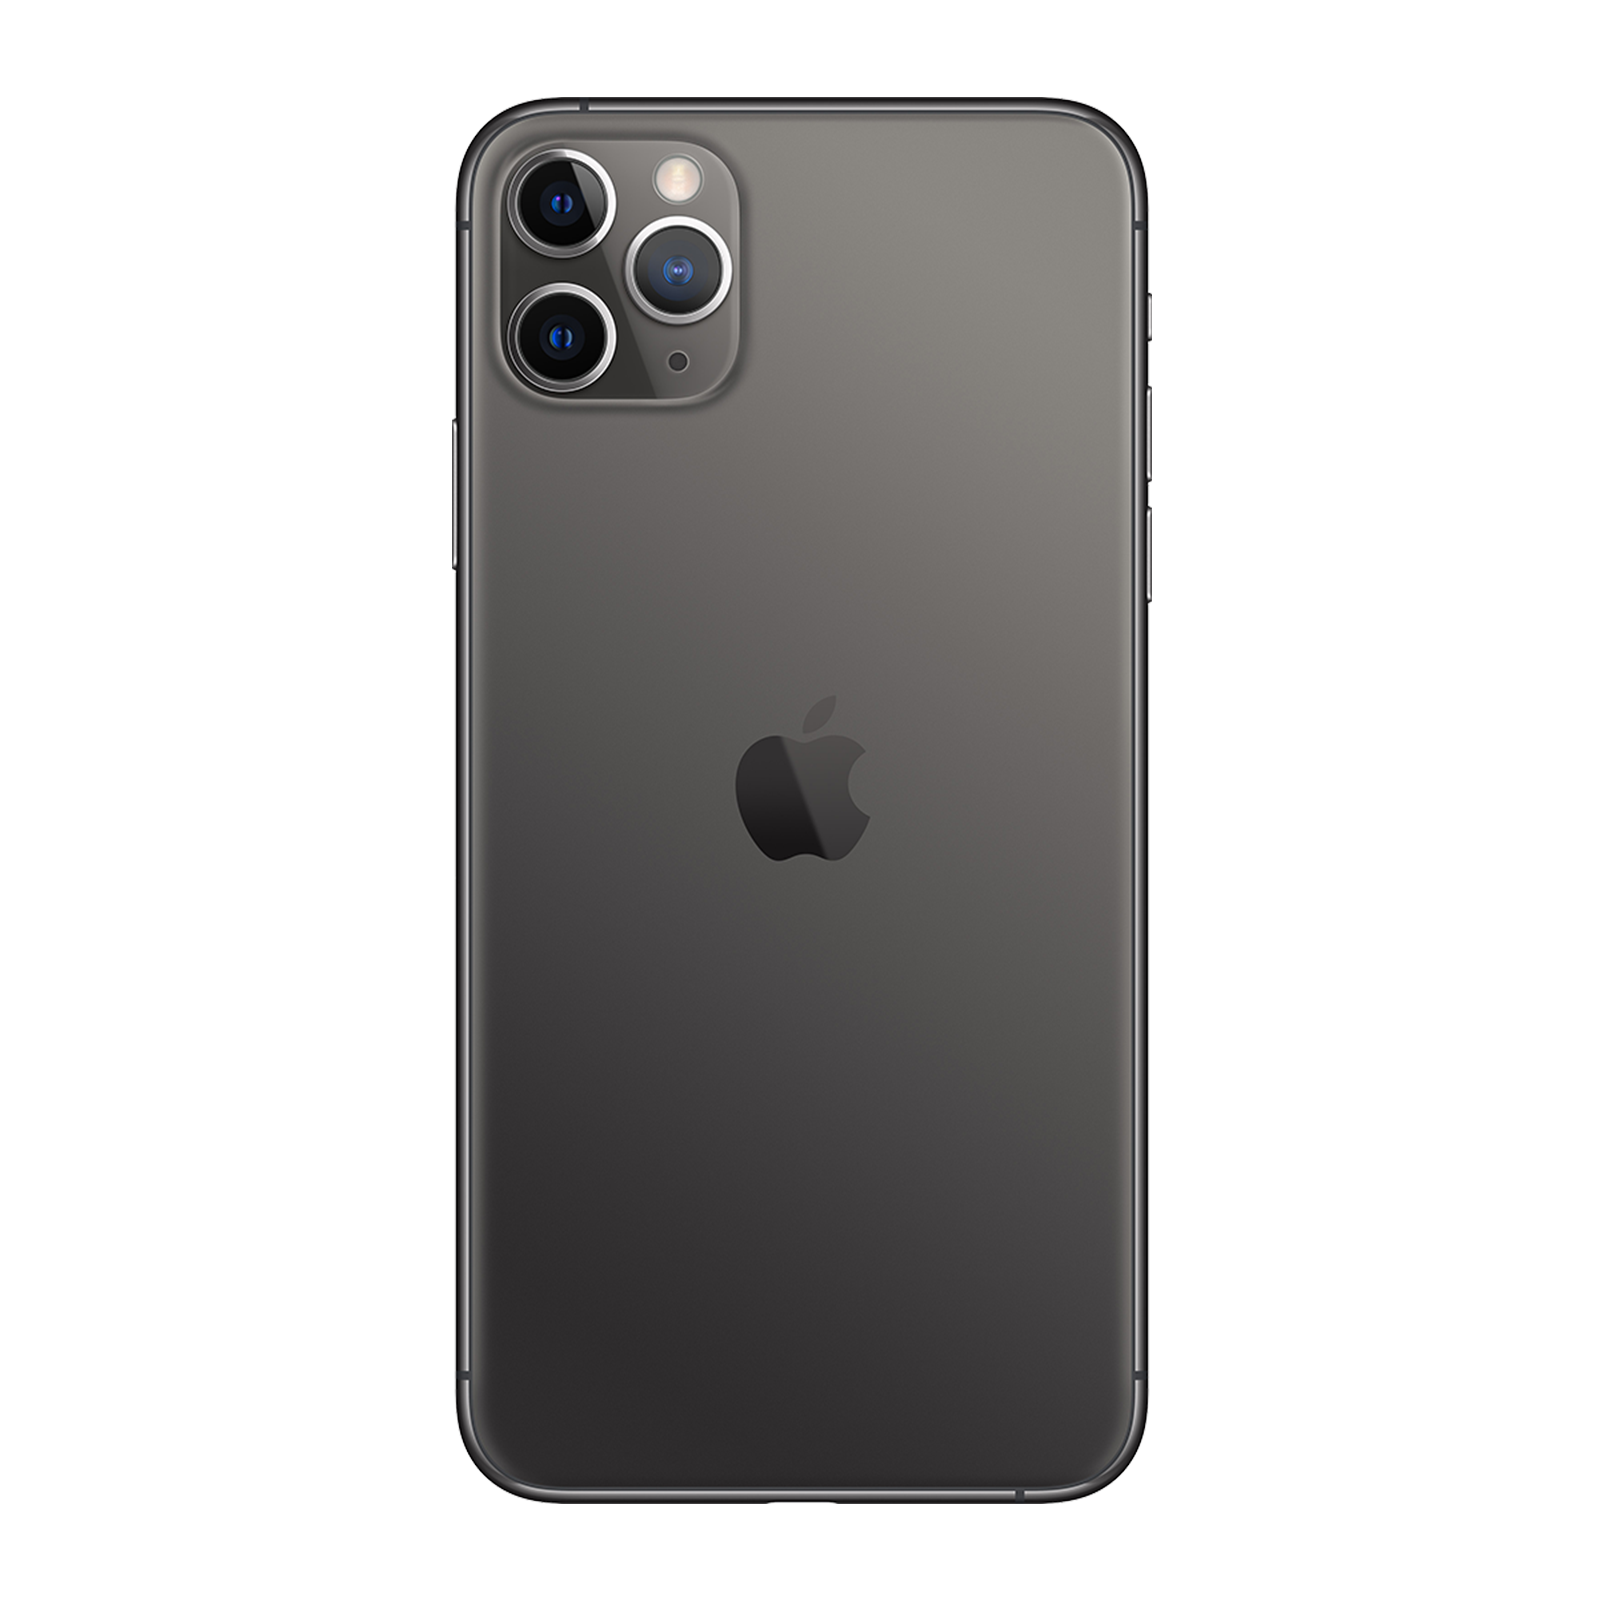 Apple iPhone 11 Pro 256GB Space Grau Fair - Ohne Vertrag